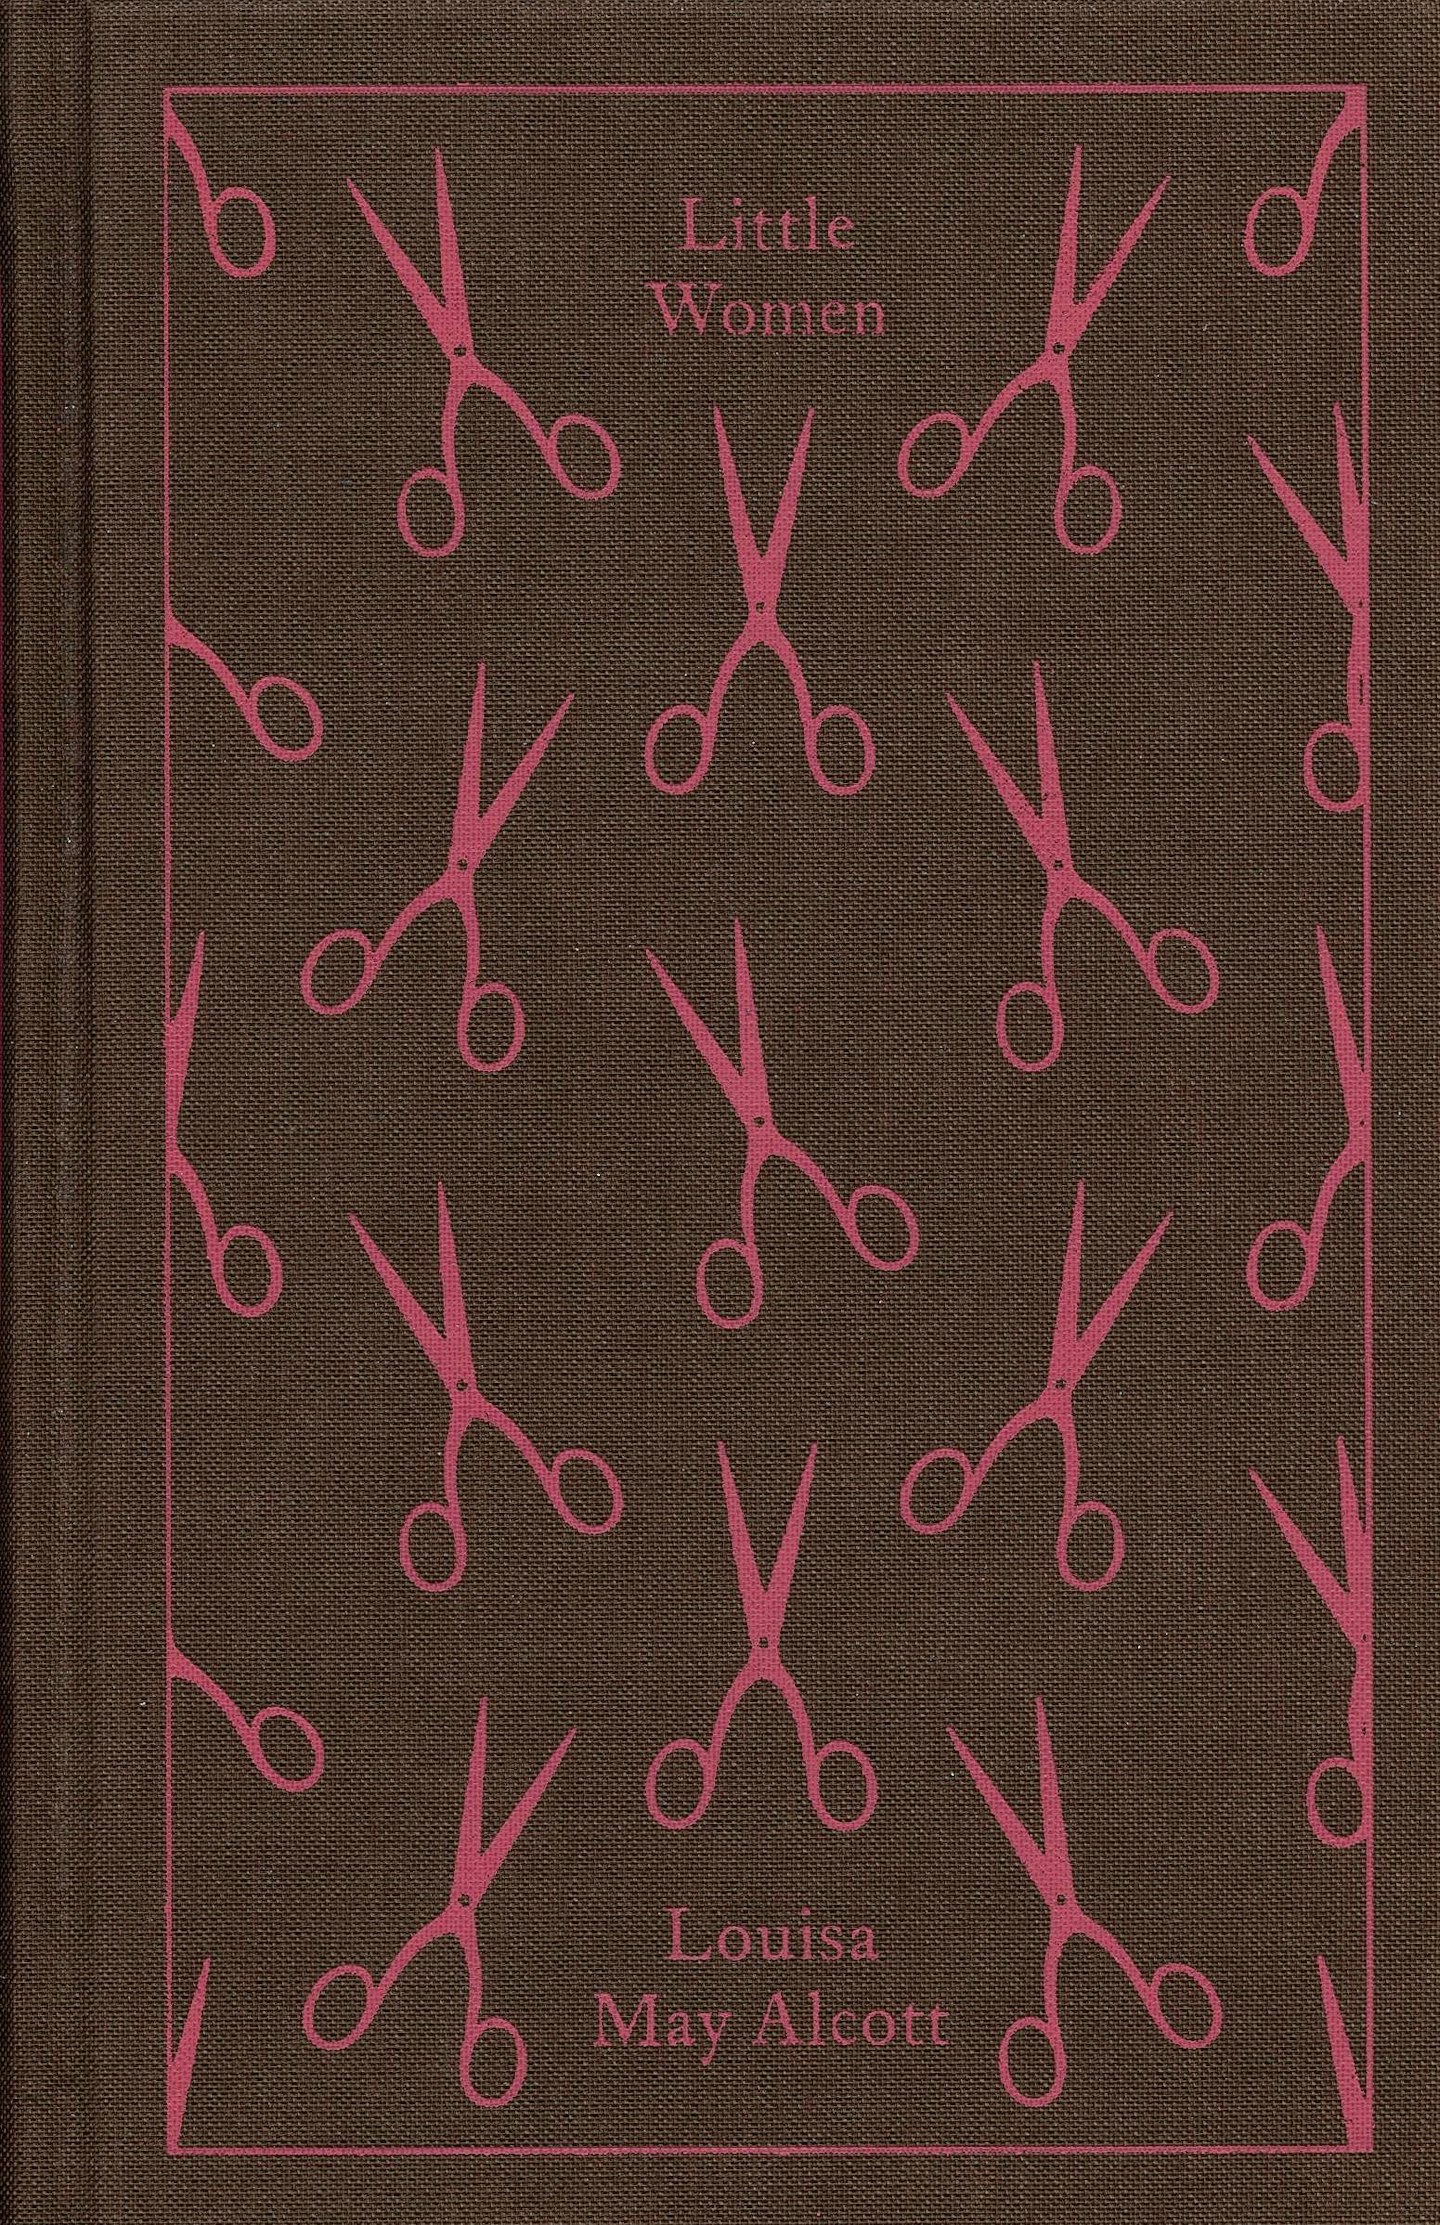 Little Women - Louisa May Alcott (Penguin Clothbound Classics)